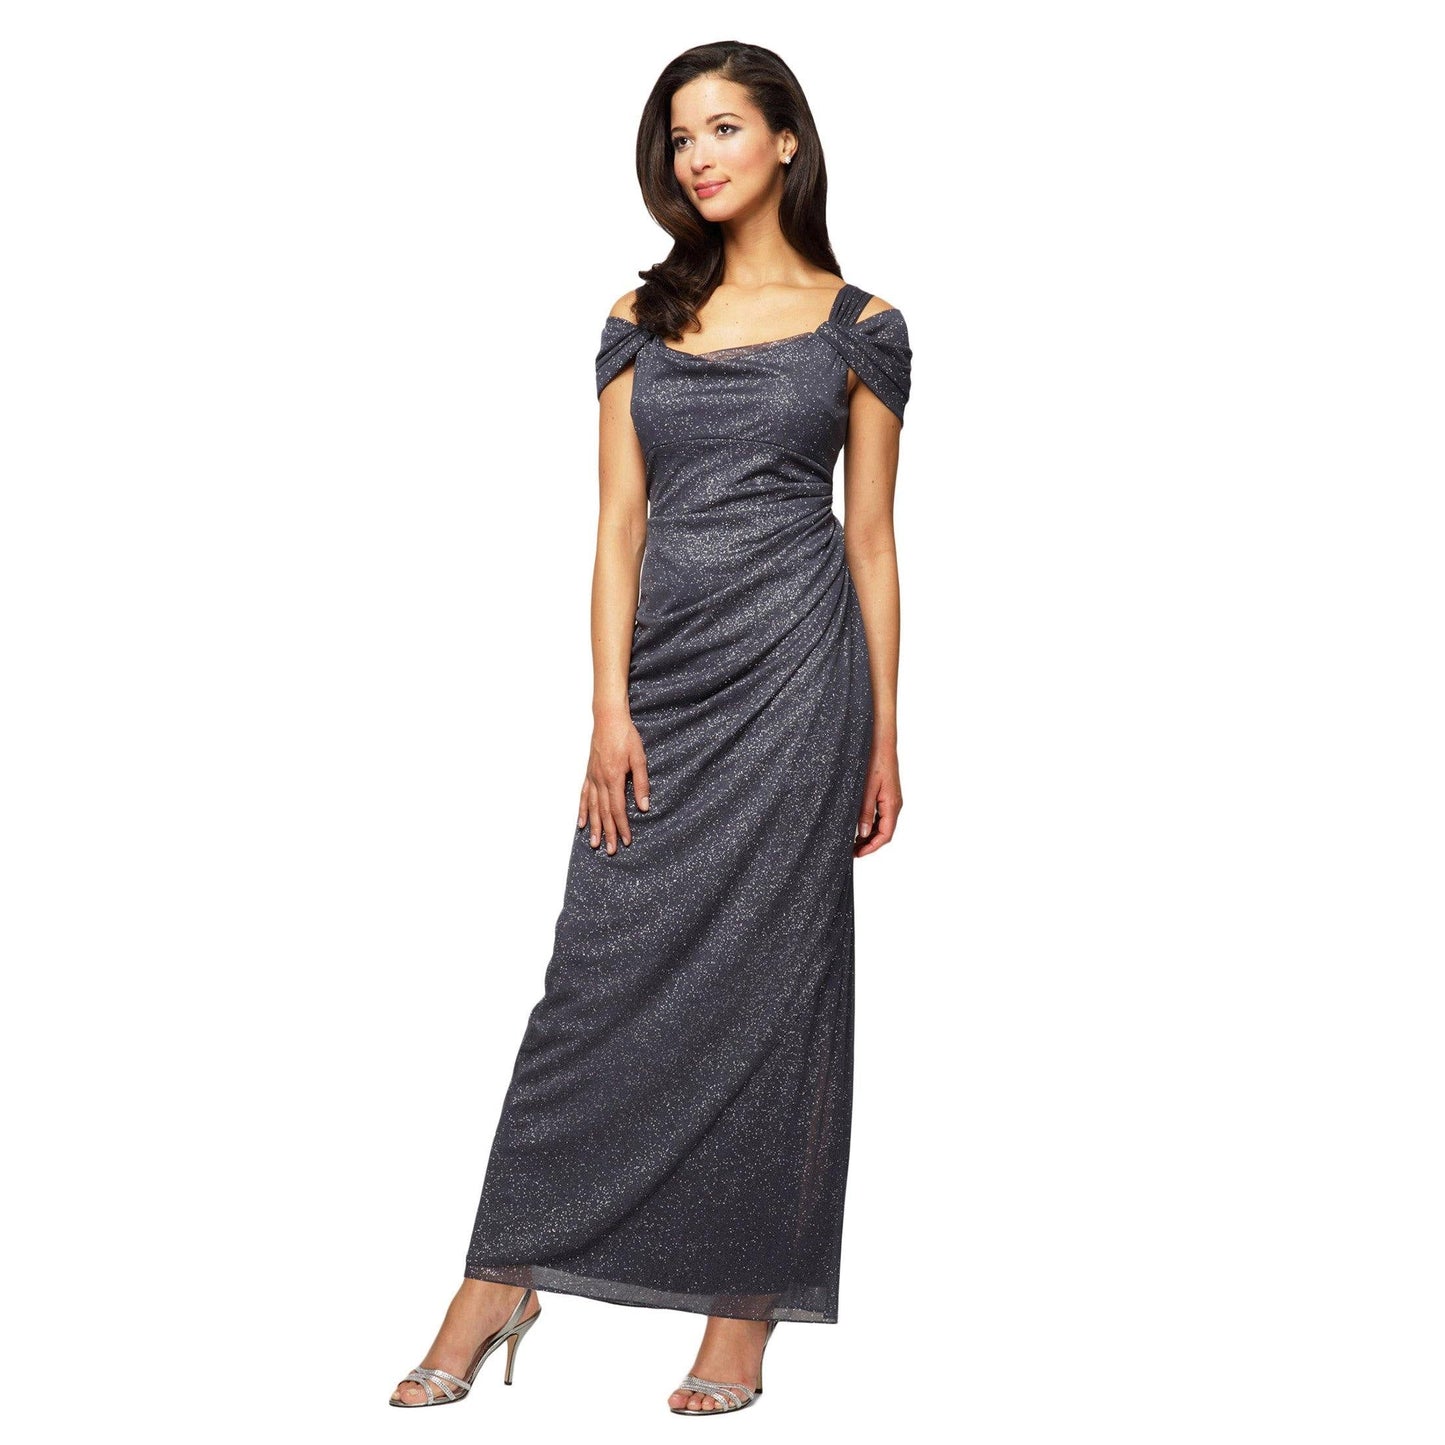 Long Formal Glitter Mesh Dress Sale - The Dress Outlet